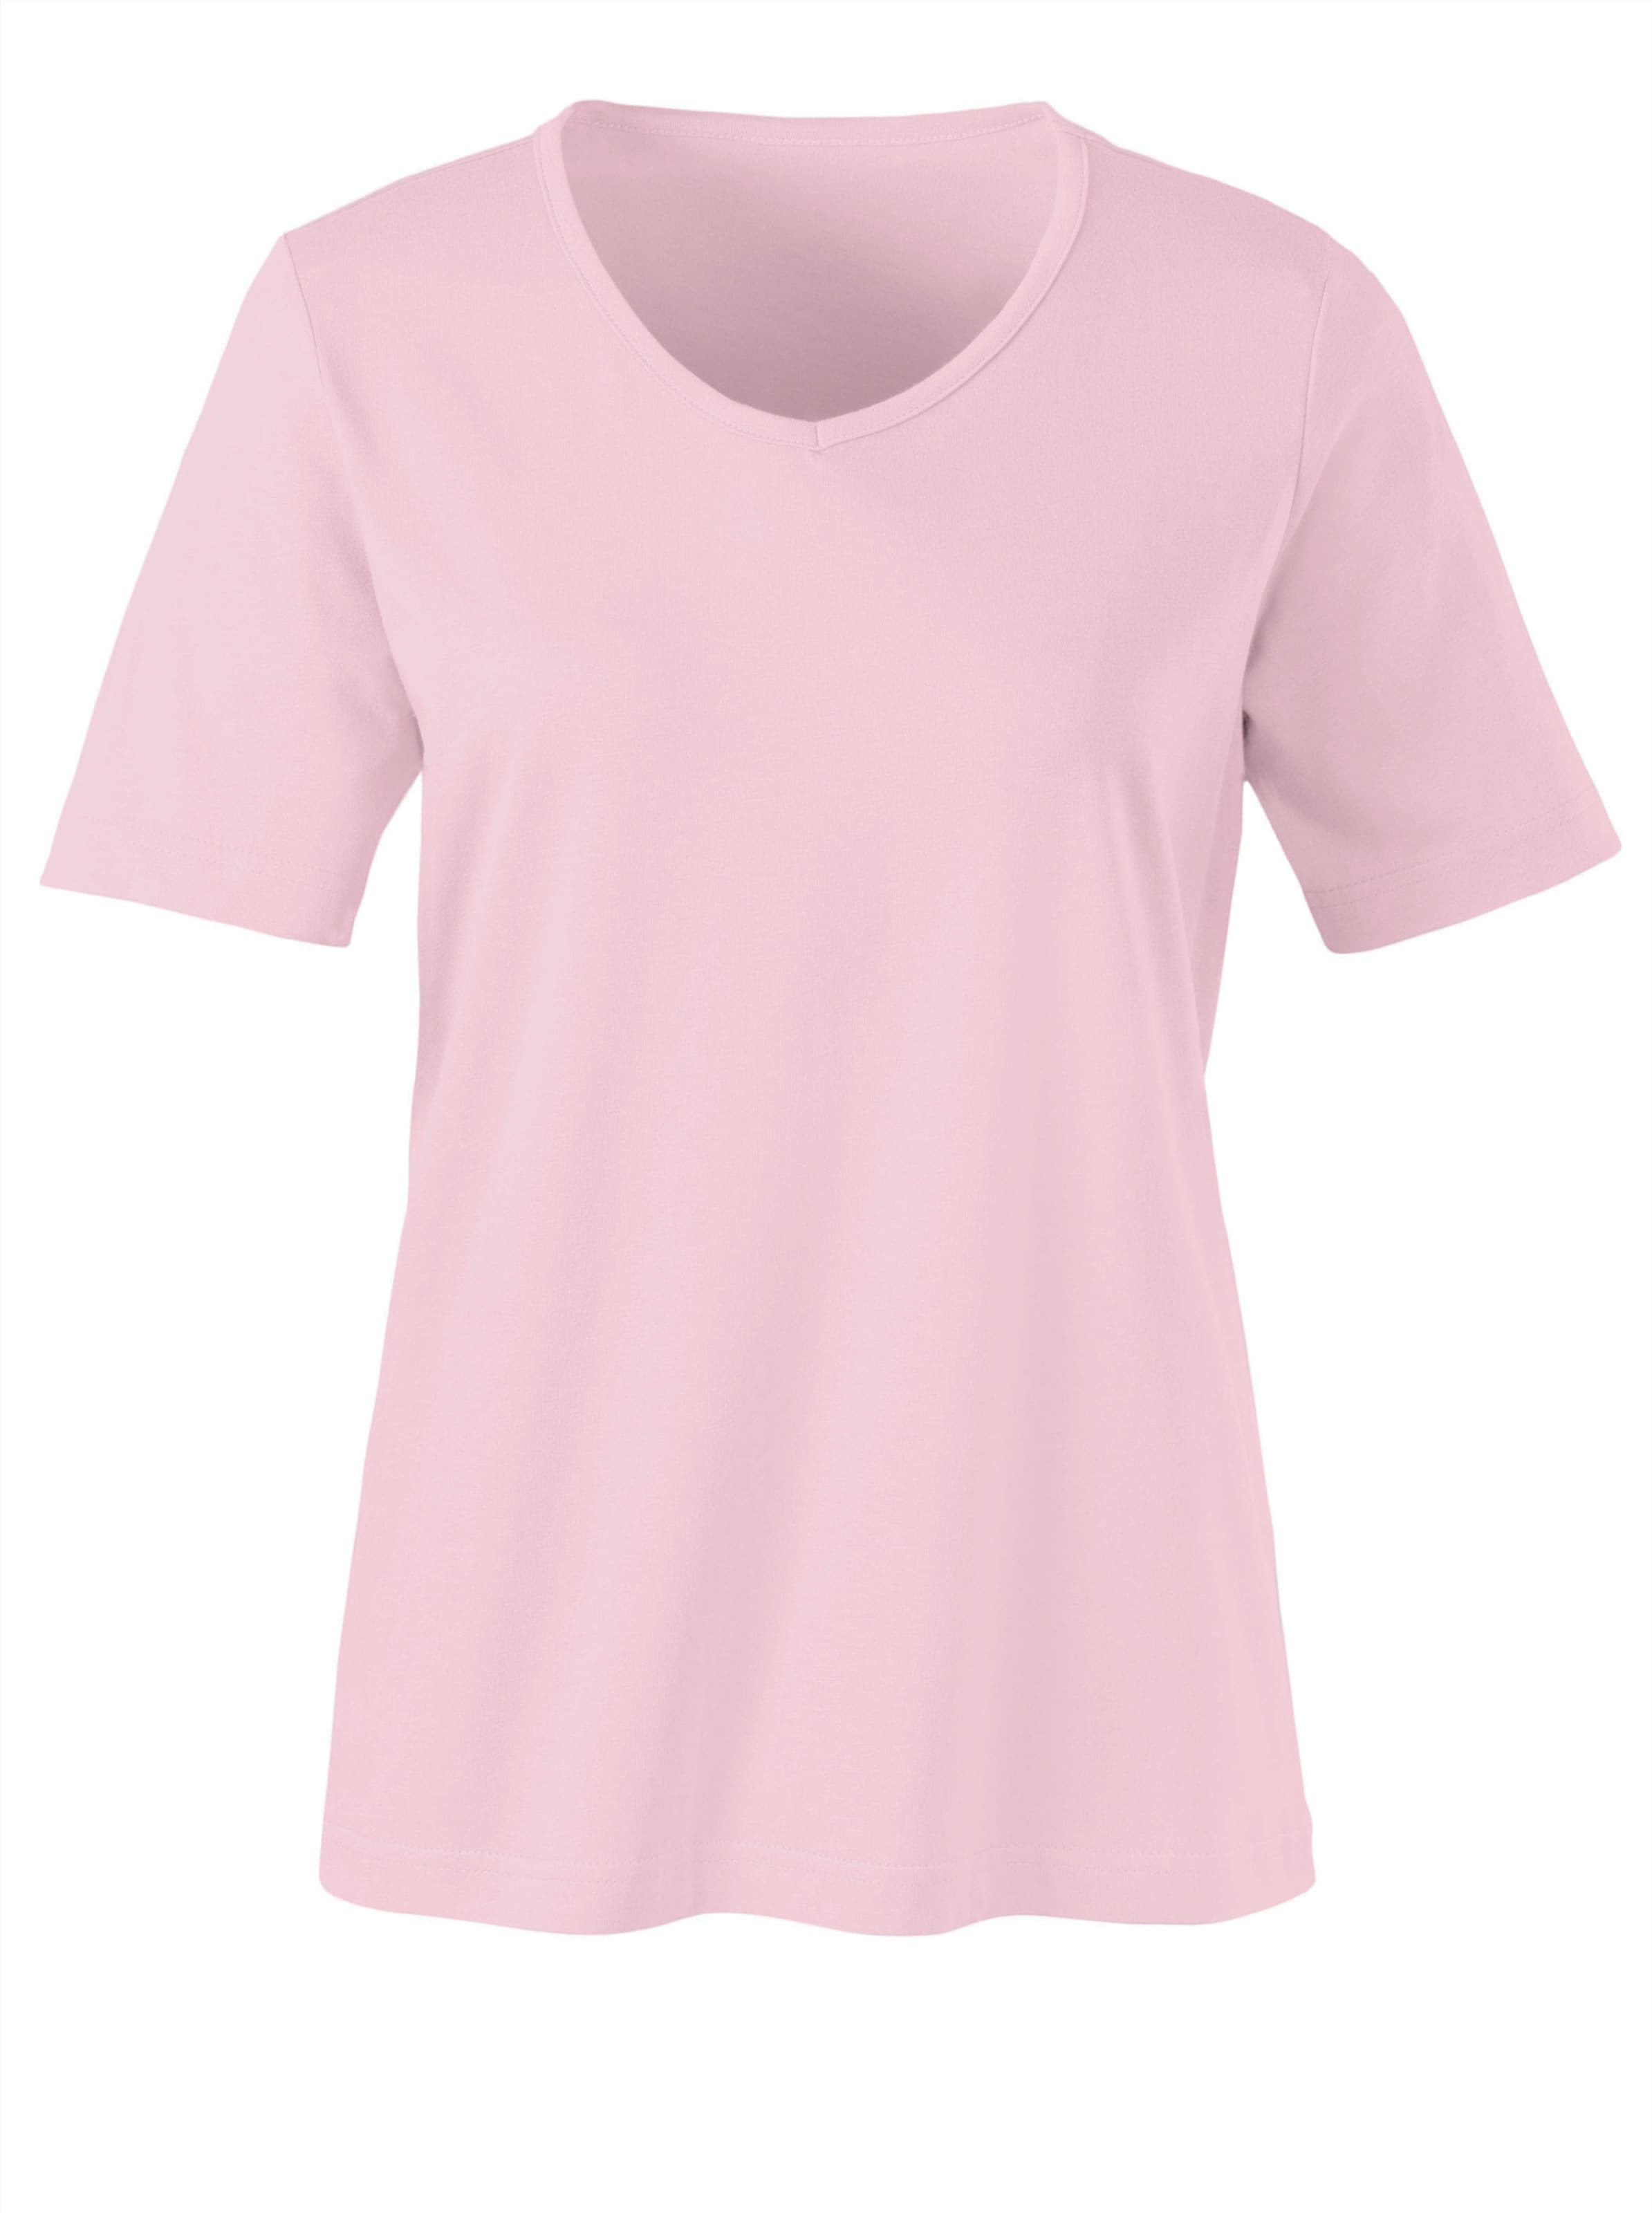 Kurzarmshirt in günstig Kaufen-Kurzarmshirt in rosé von heine. Kurzarmshirt in rosé von heine <![CDATA[Shirt – besonders günstig! Mit paspeliertem V-Ausschnitt.]]>. 